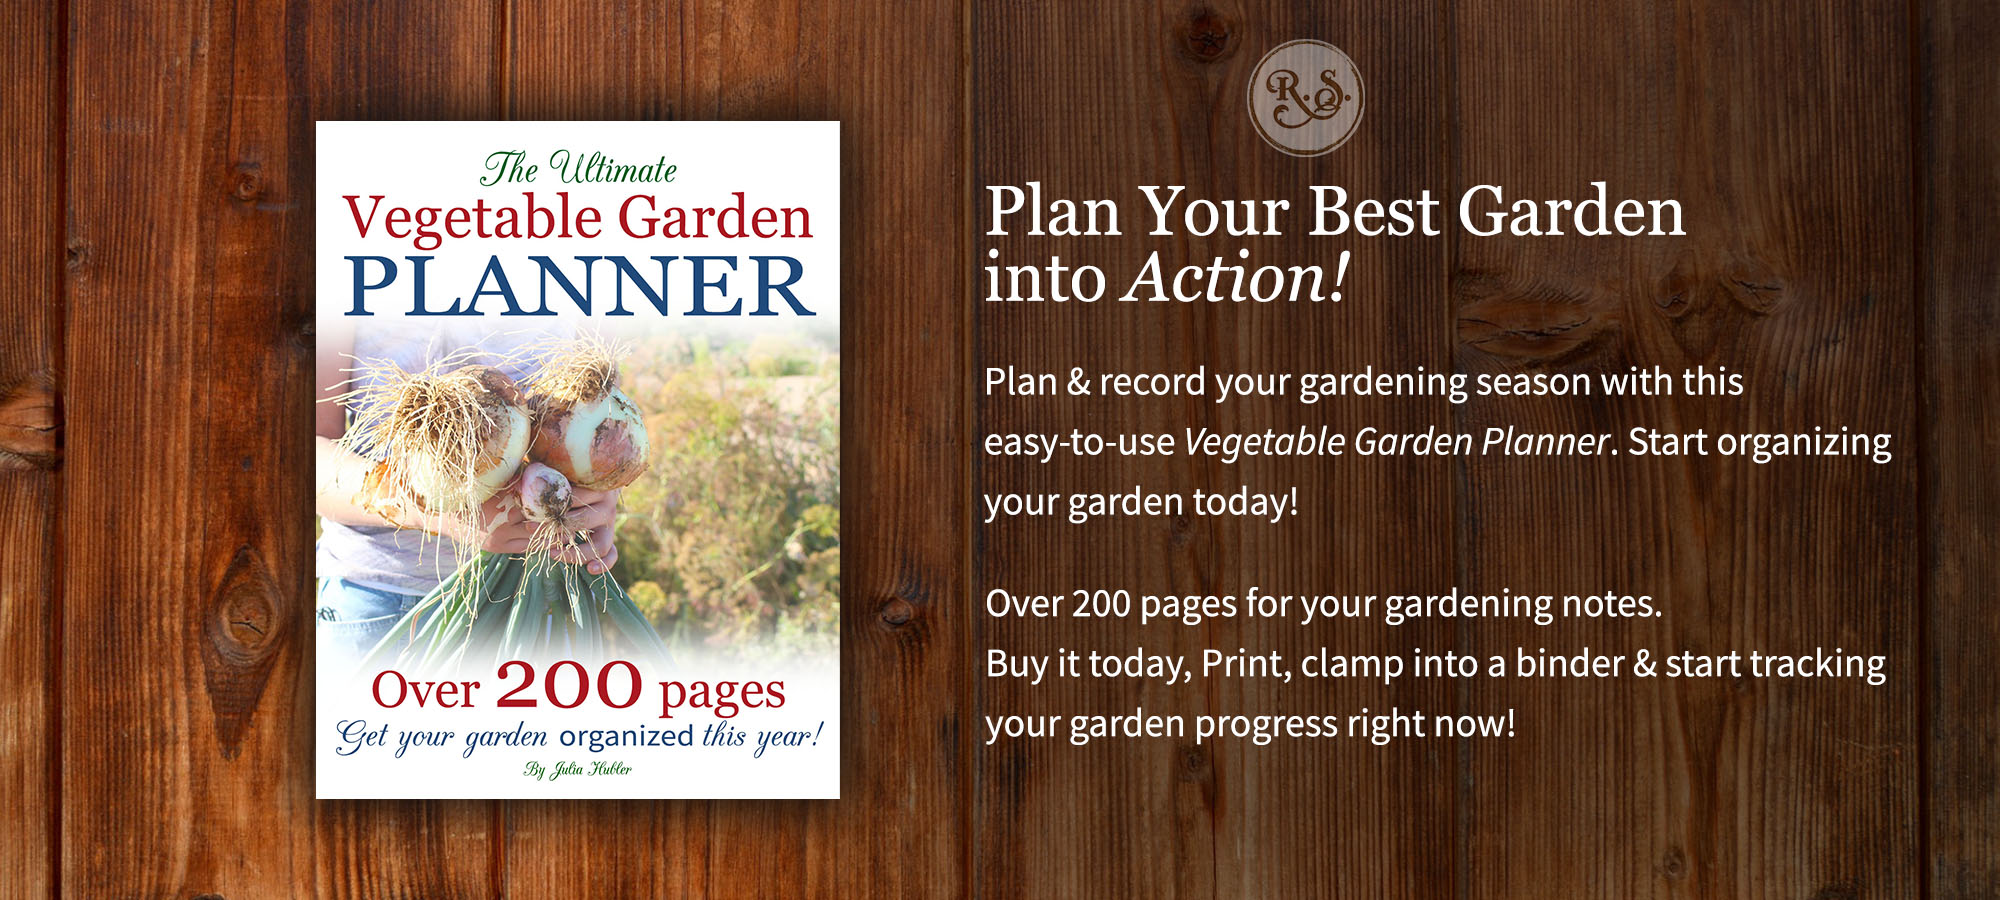 vegetable garden planner sales page 2